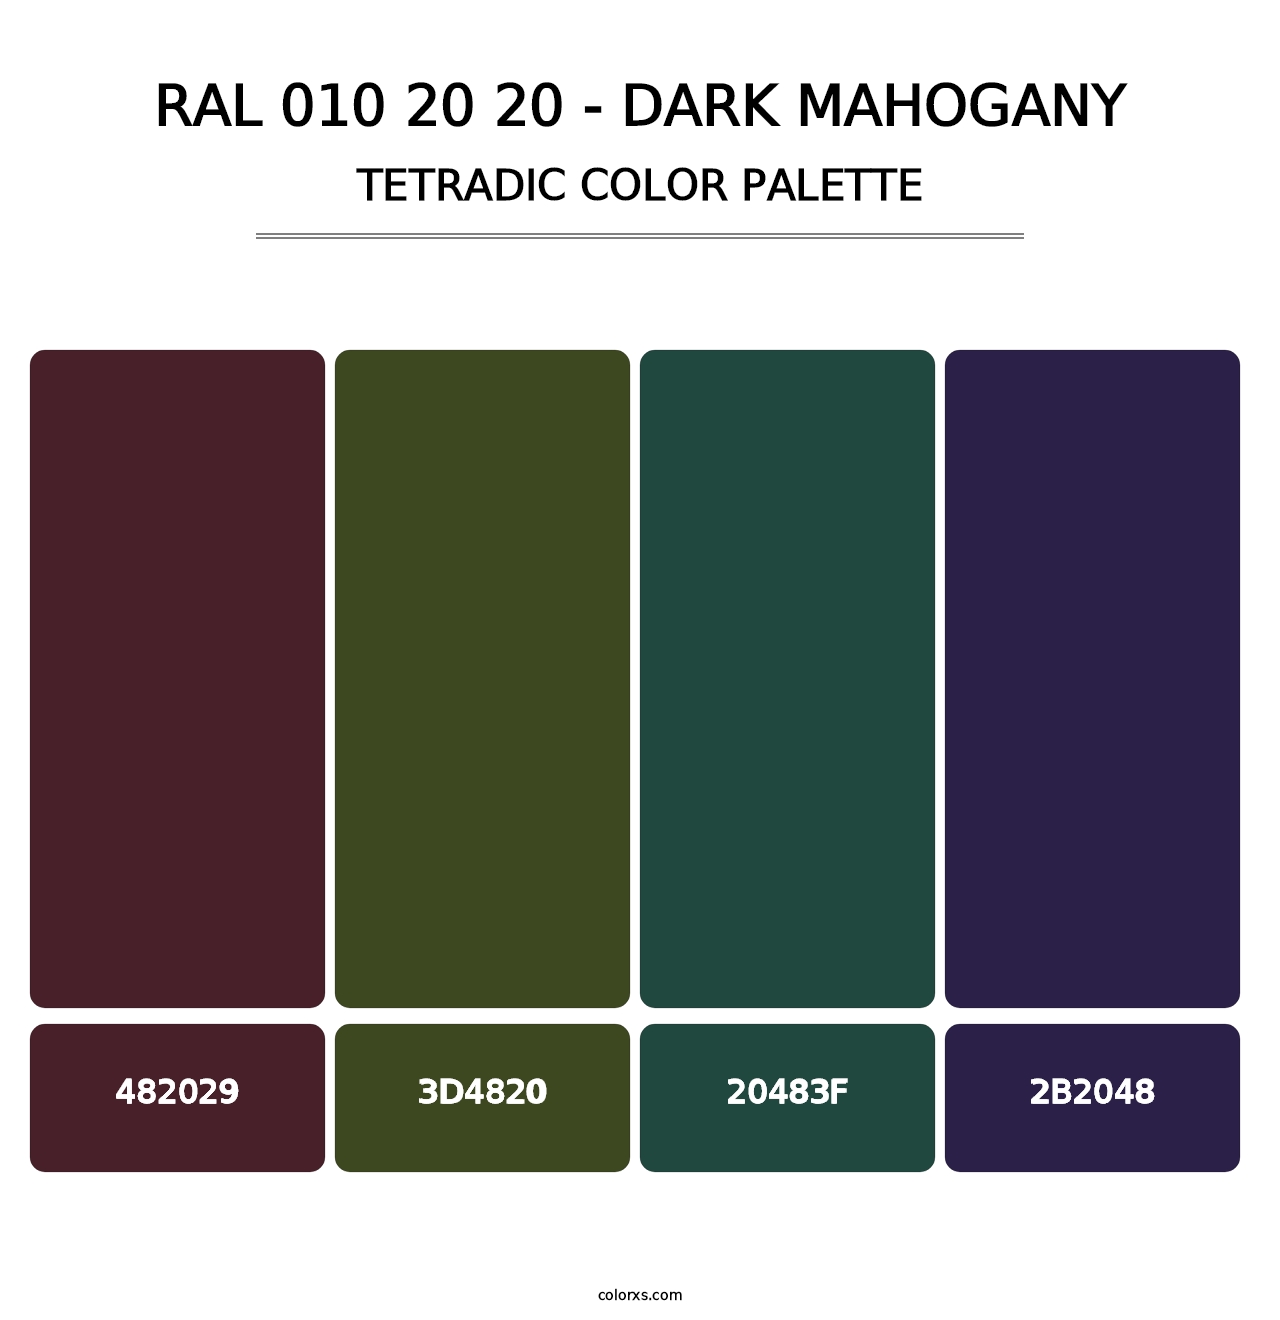 RAL 010 20 20 - Dark Mahogany - Tetradic Color Palette